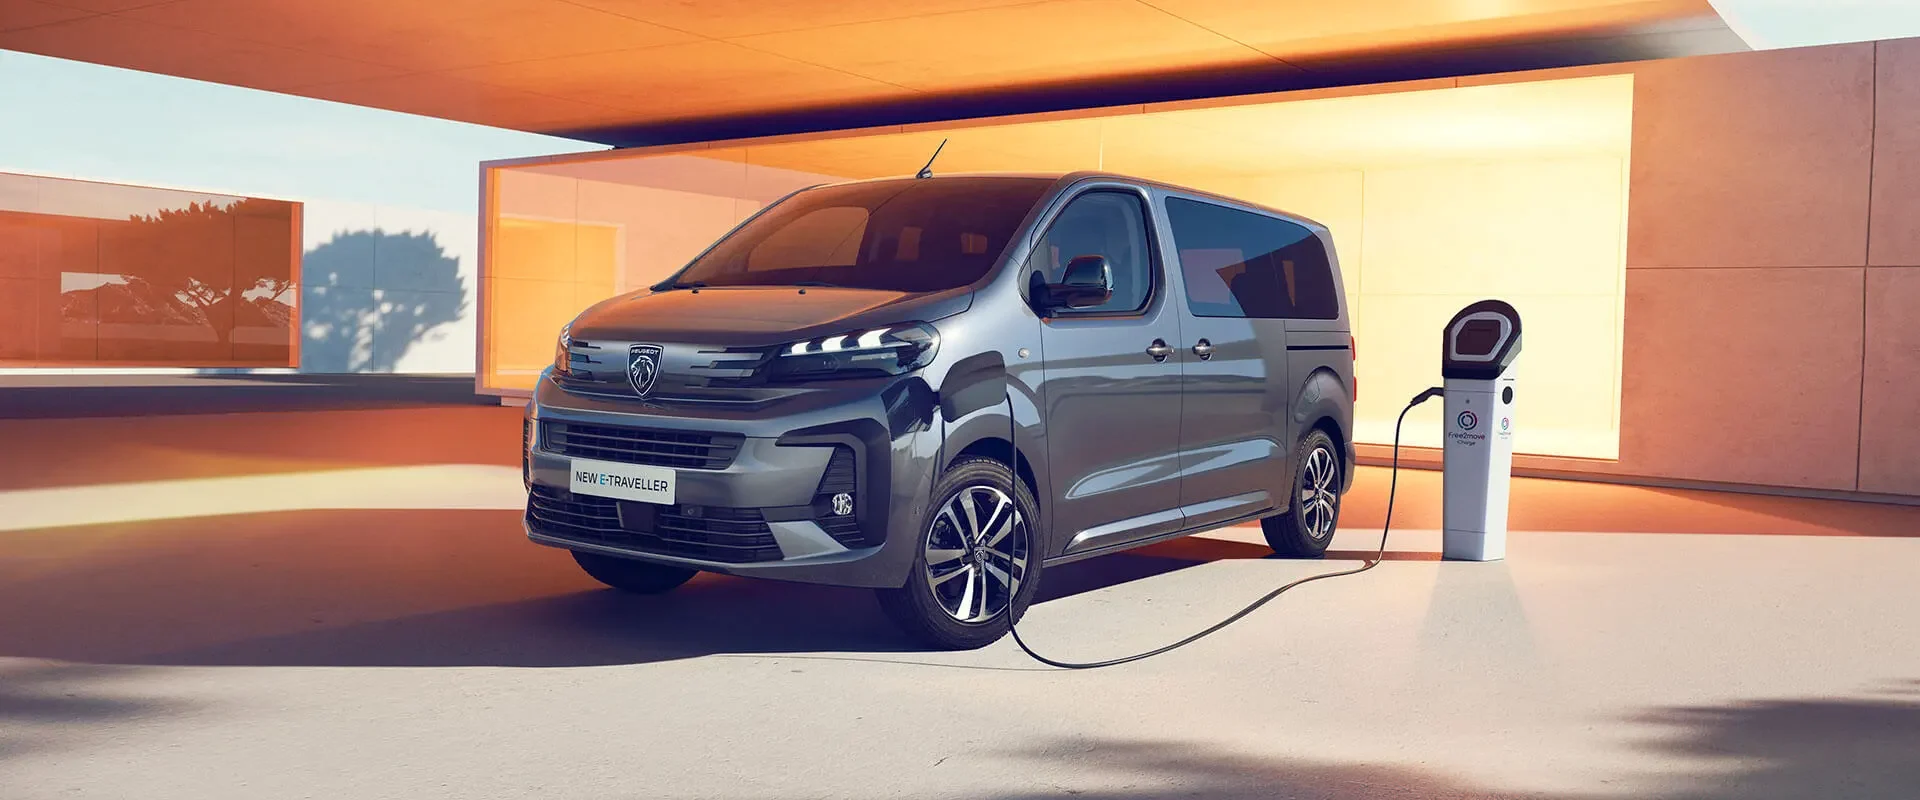 Peugeot e-traveller 100% elétrico a carregar